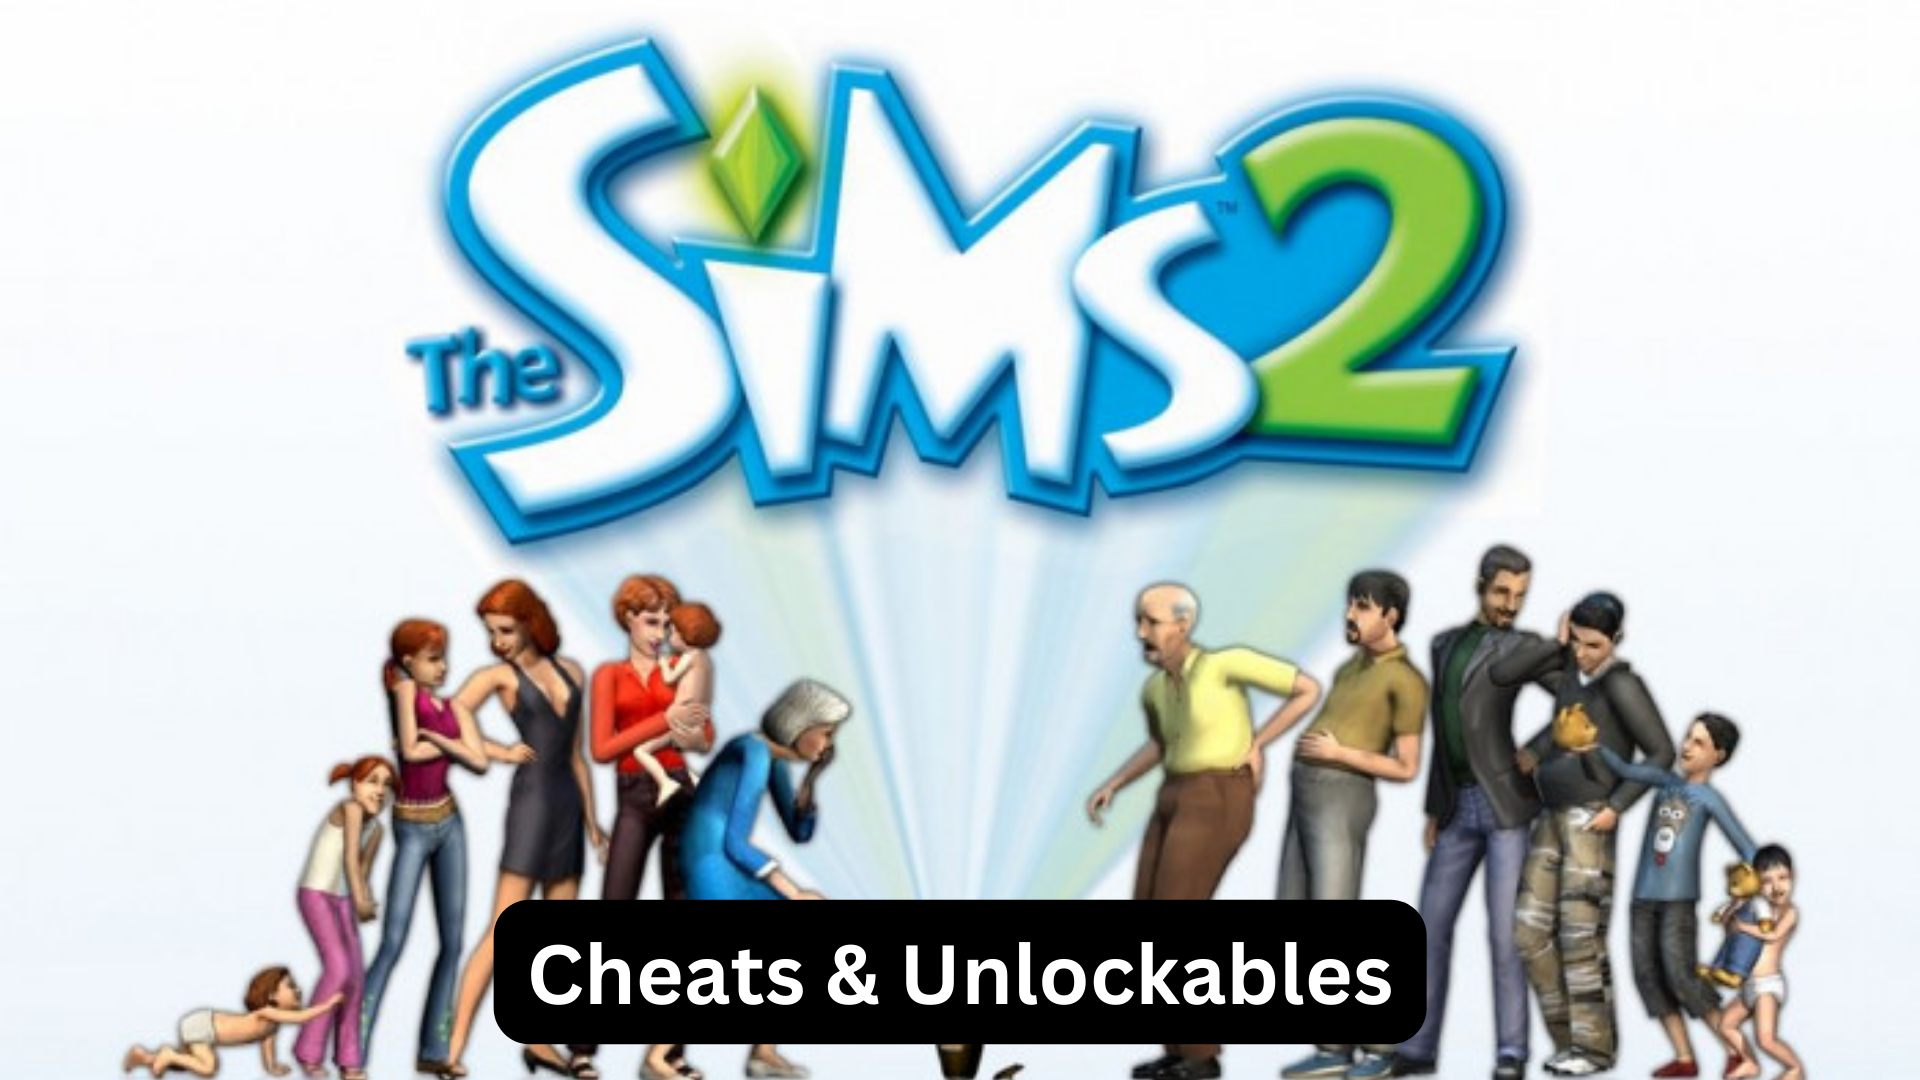 the sims 2 cheats